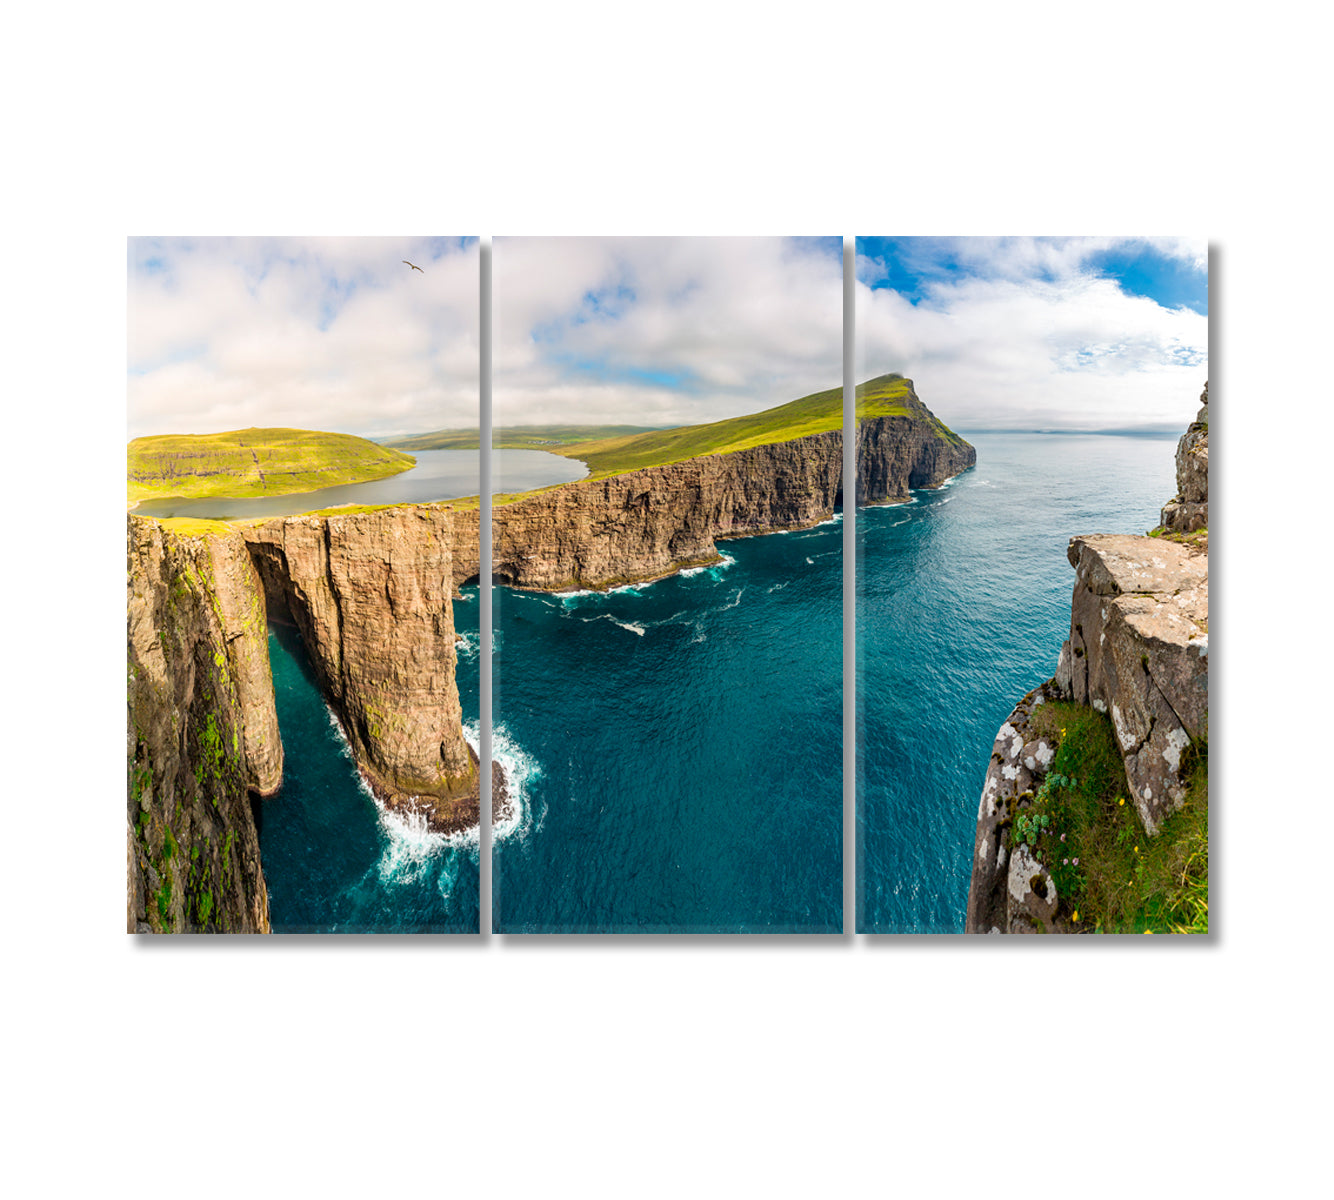 Leitisvatn Or Sorvagsvatn Lake Over the Ocean Faroe Islands Canvas Print-Canvas Print-CetArt-3 Panels-36x24 inches-CetArt